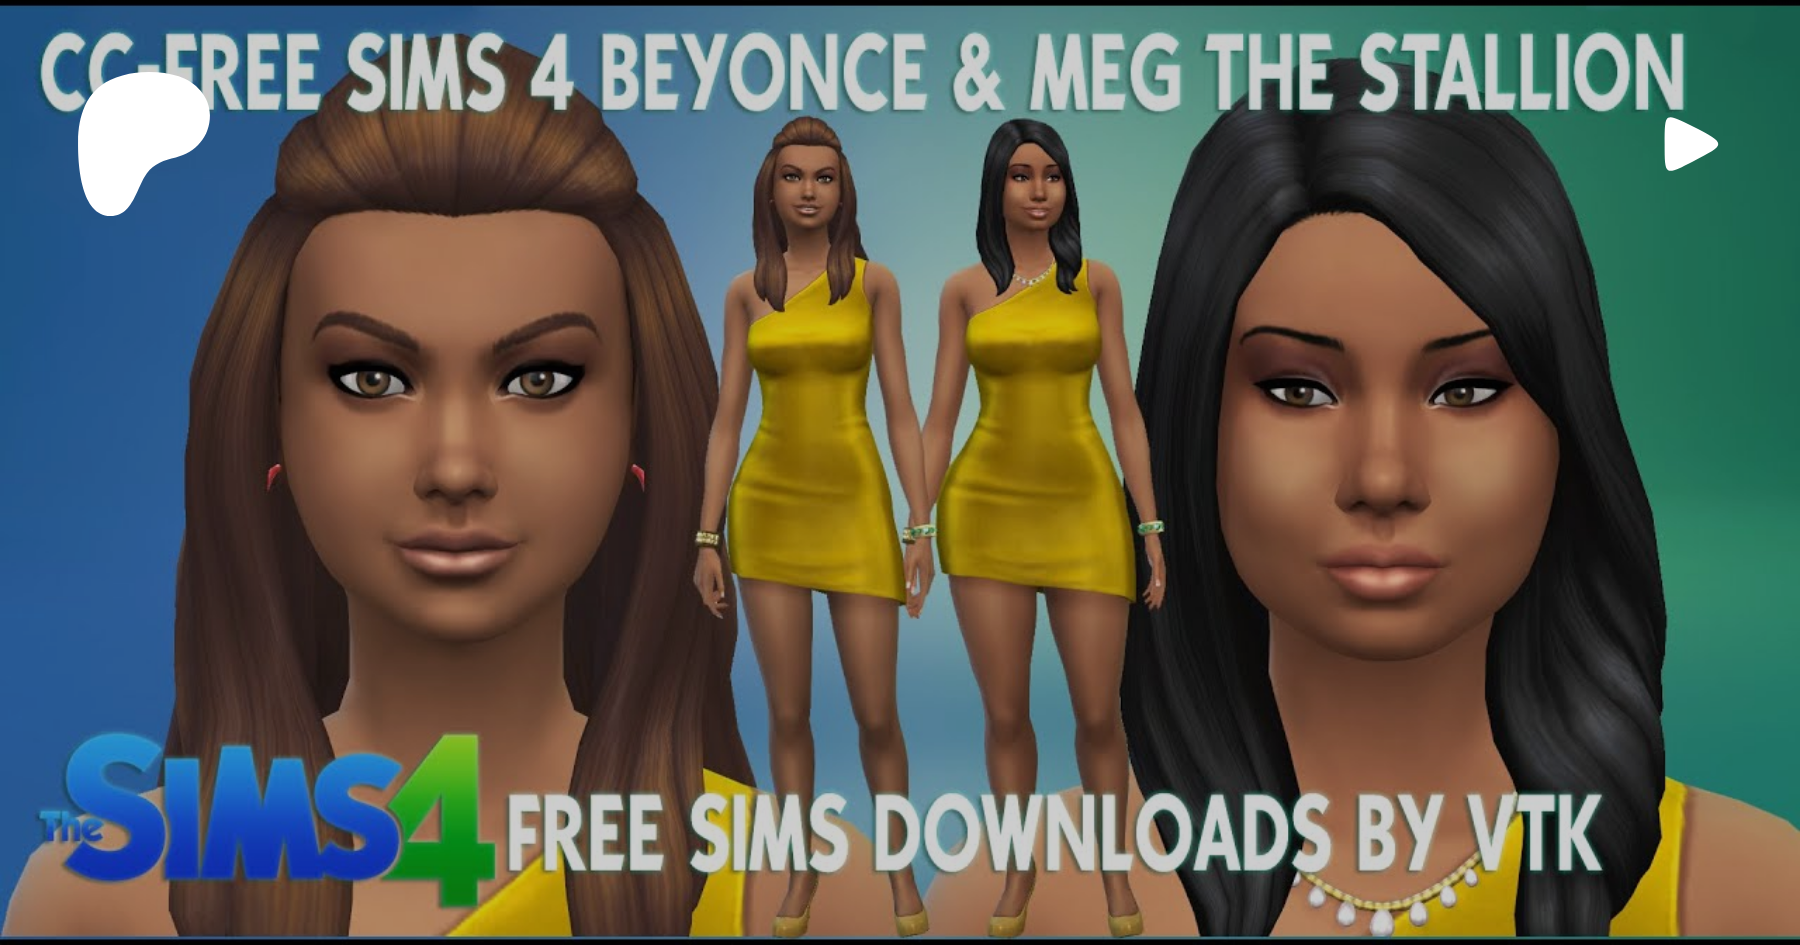 CC-Free Beyonce & Megan The Stallion Free Download!